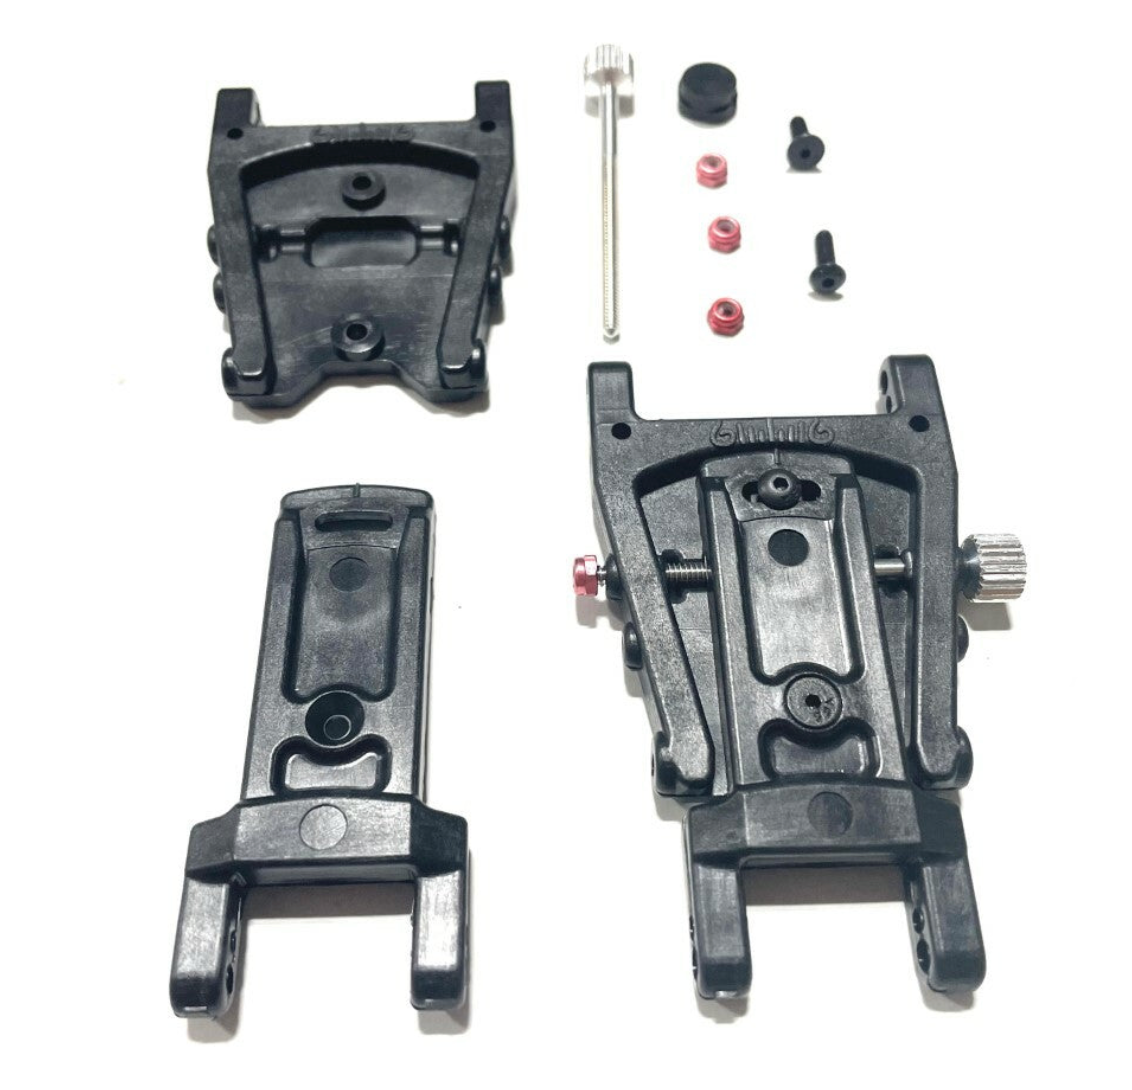 Standard Adjustable Rear Arm Kit GFR-1287